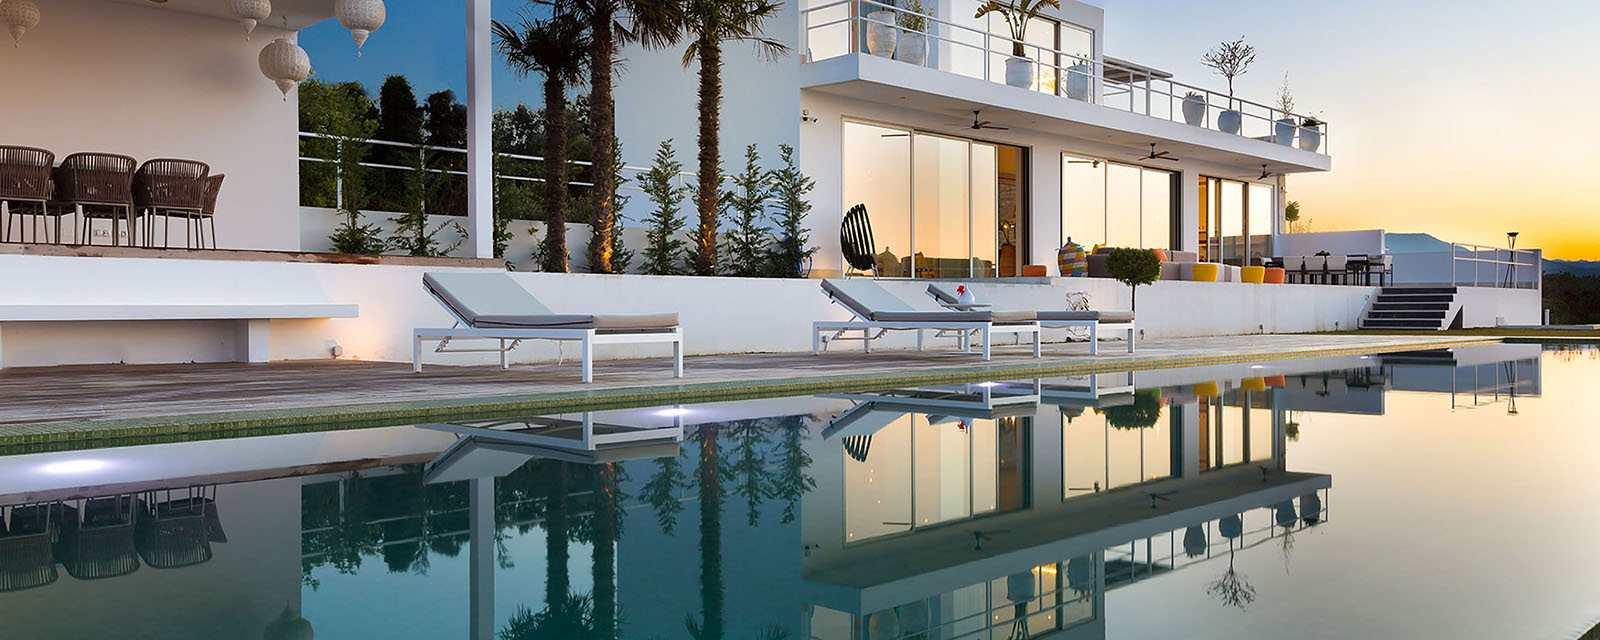 Moderne Ferienvilla Auf Kreta Mieten Villa Annalys 1